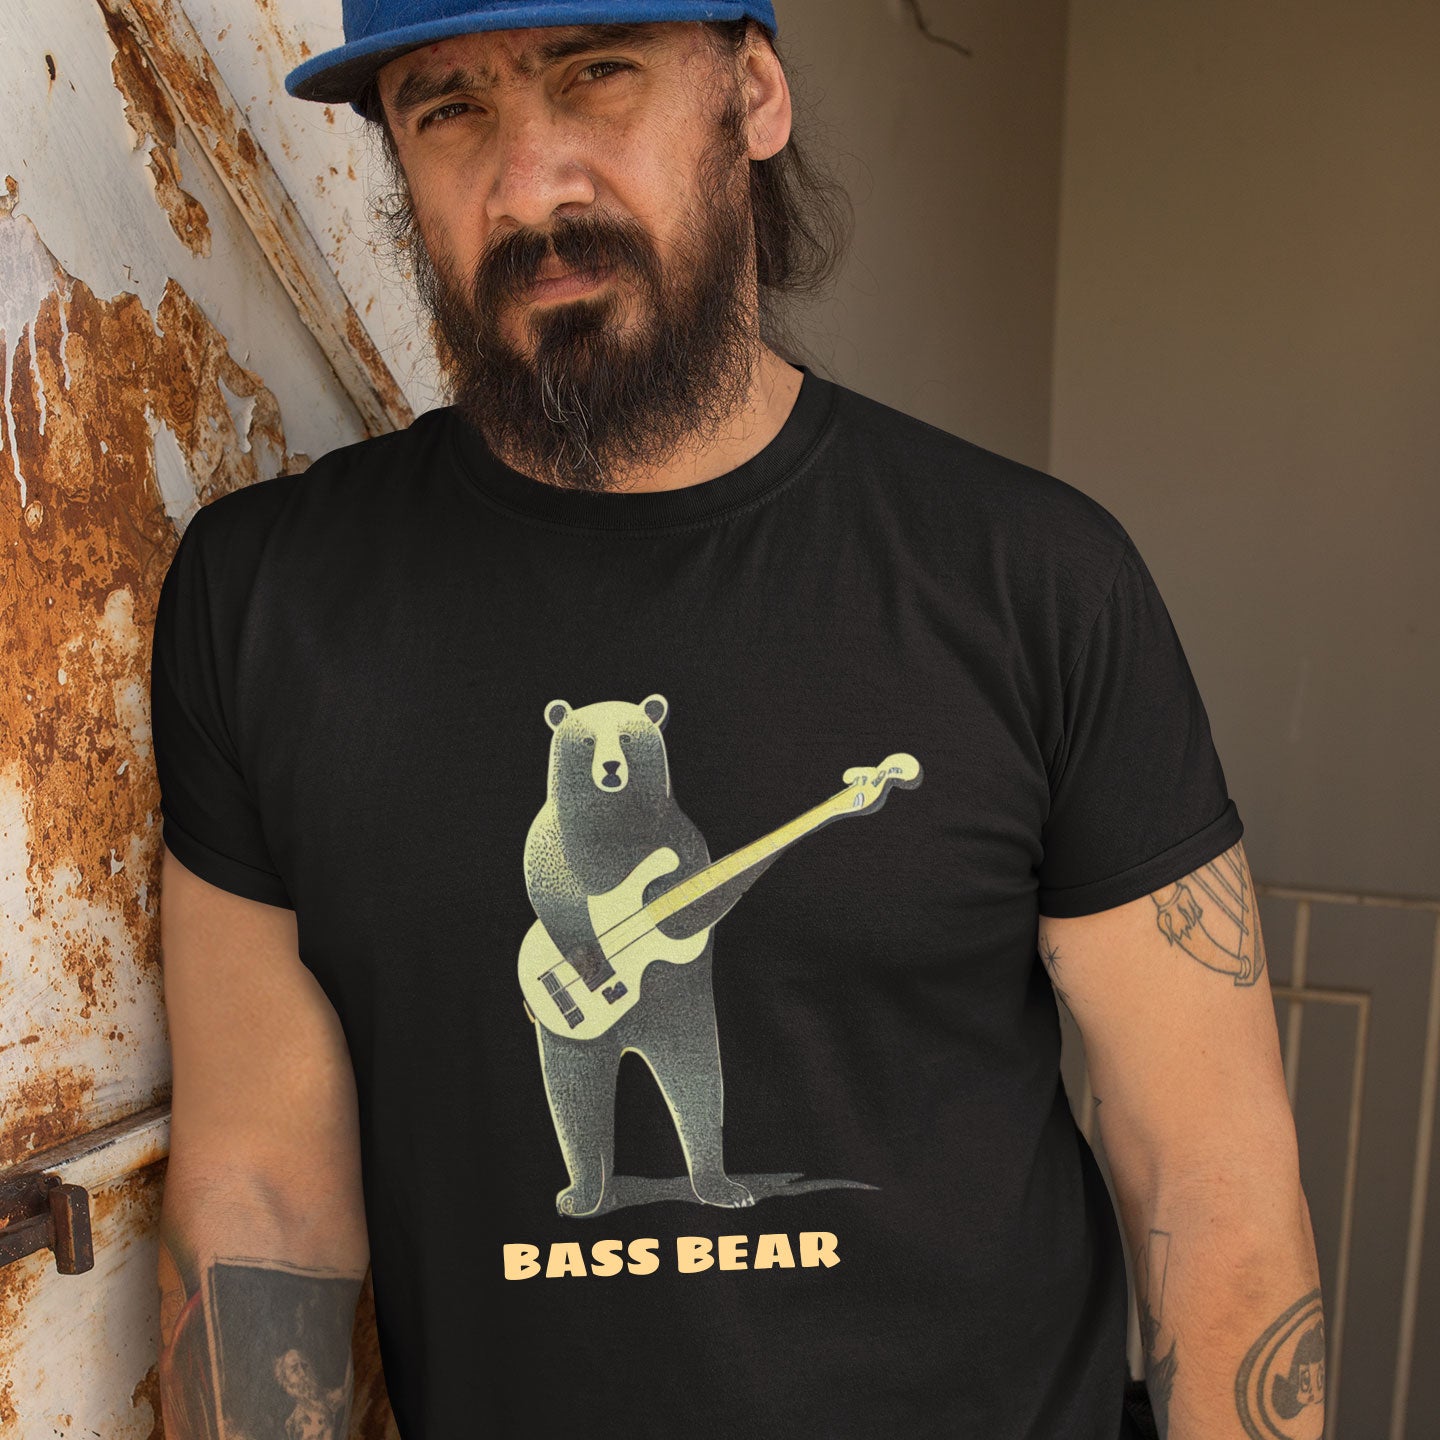 Man wearing a black t-shirt with a bear playing the bass guitar print